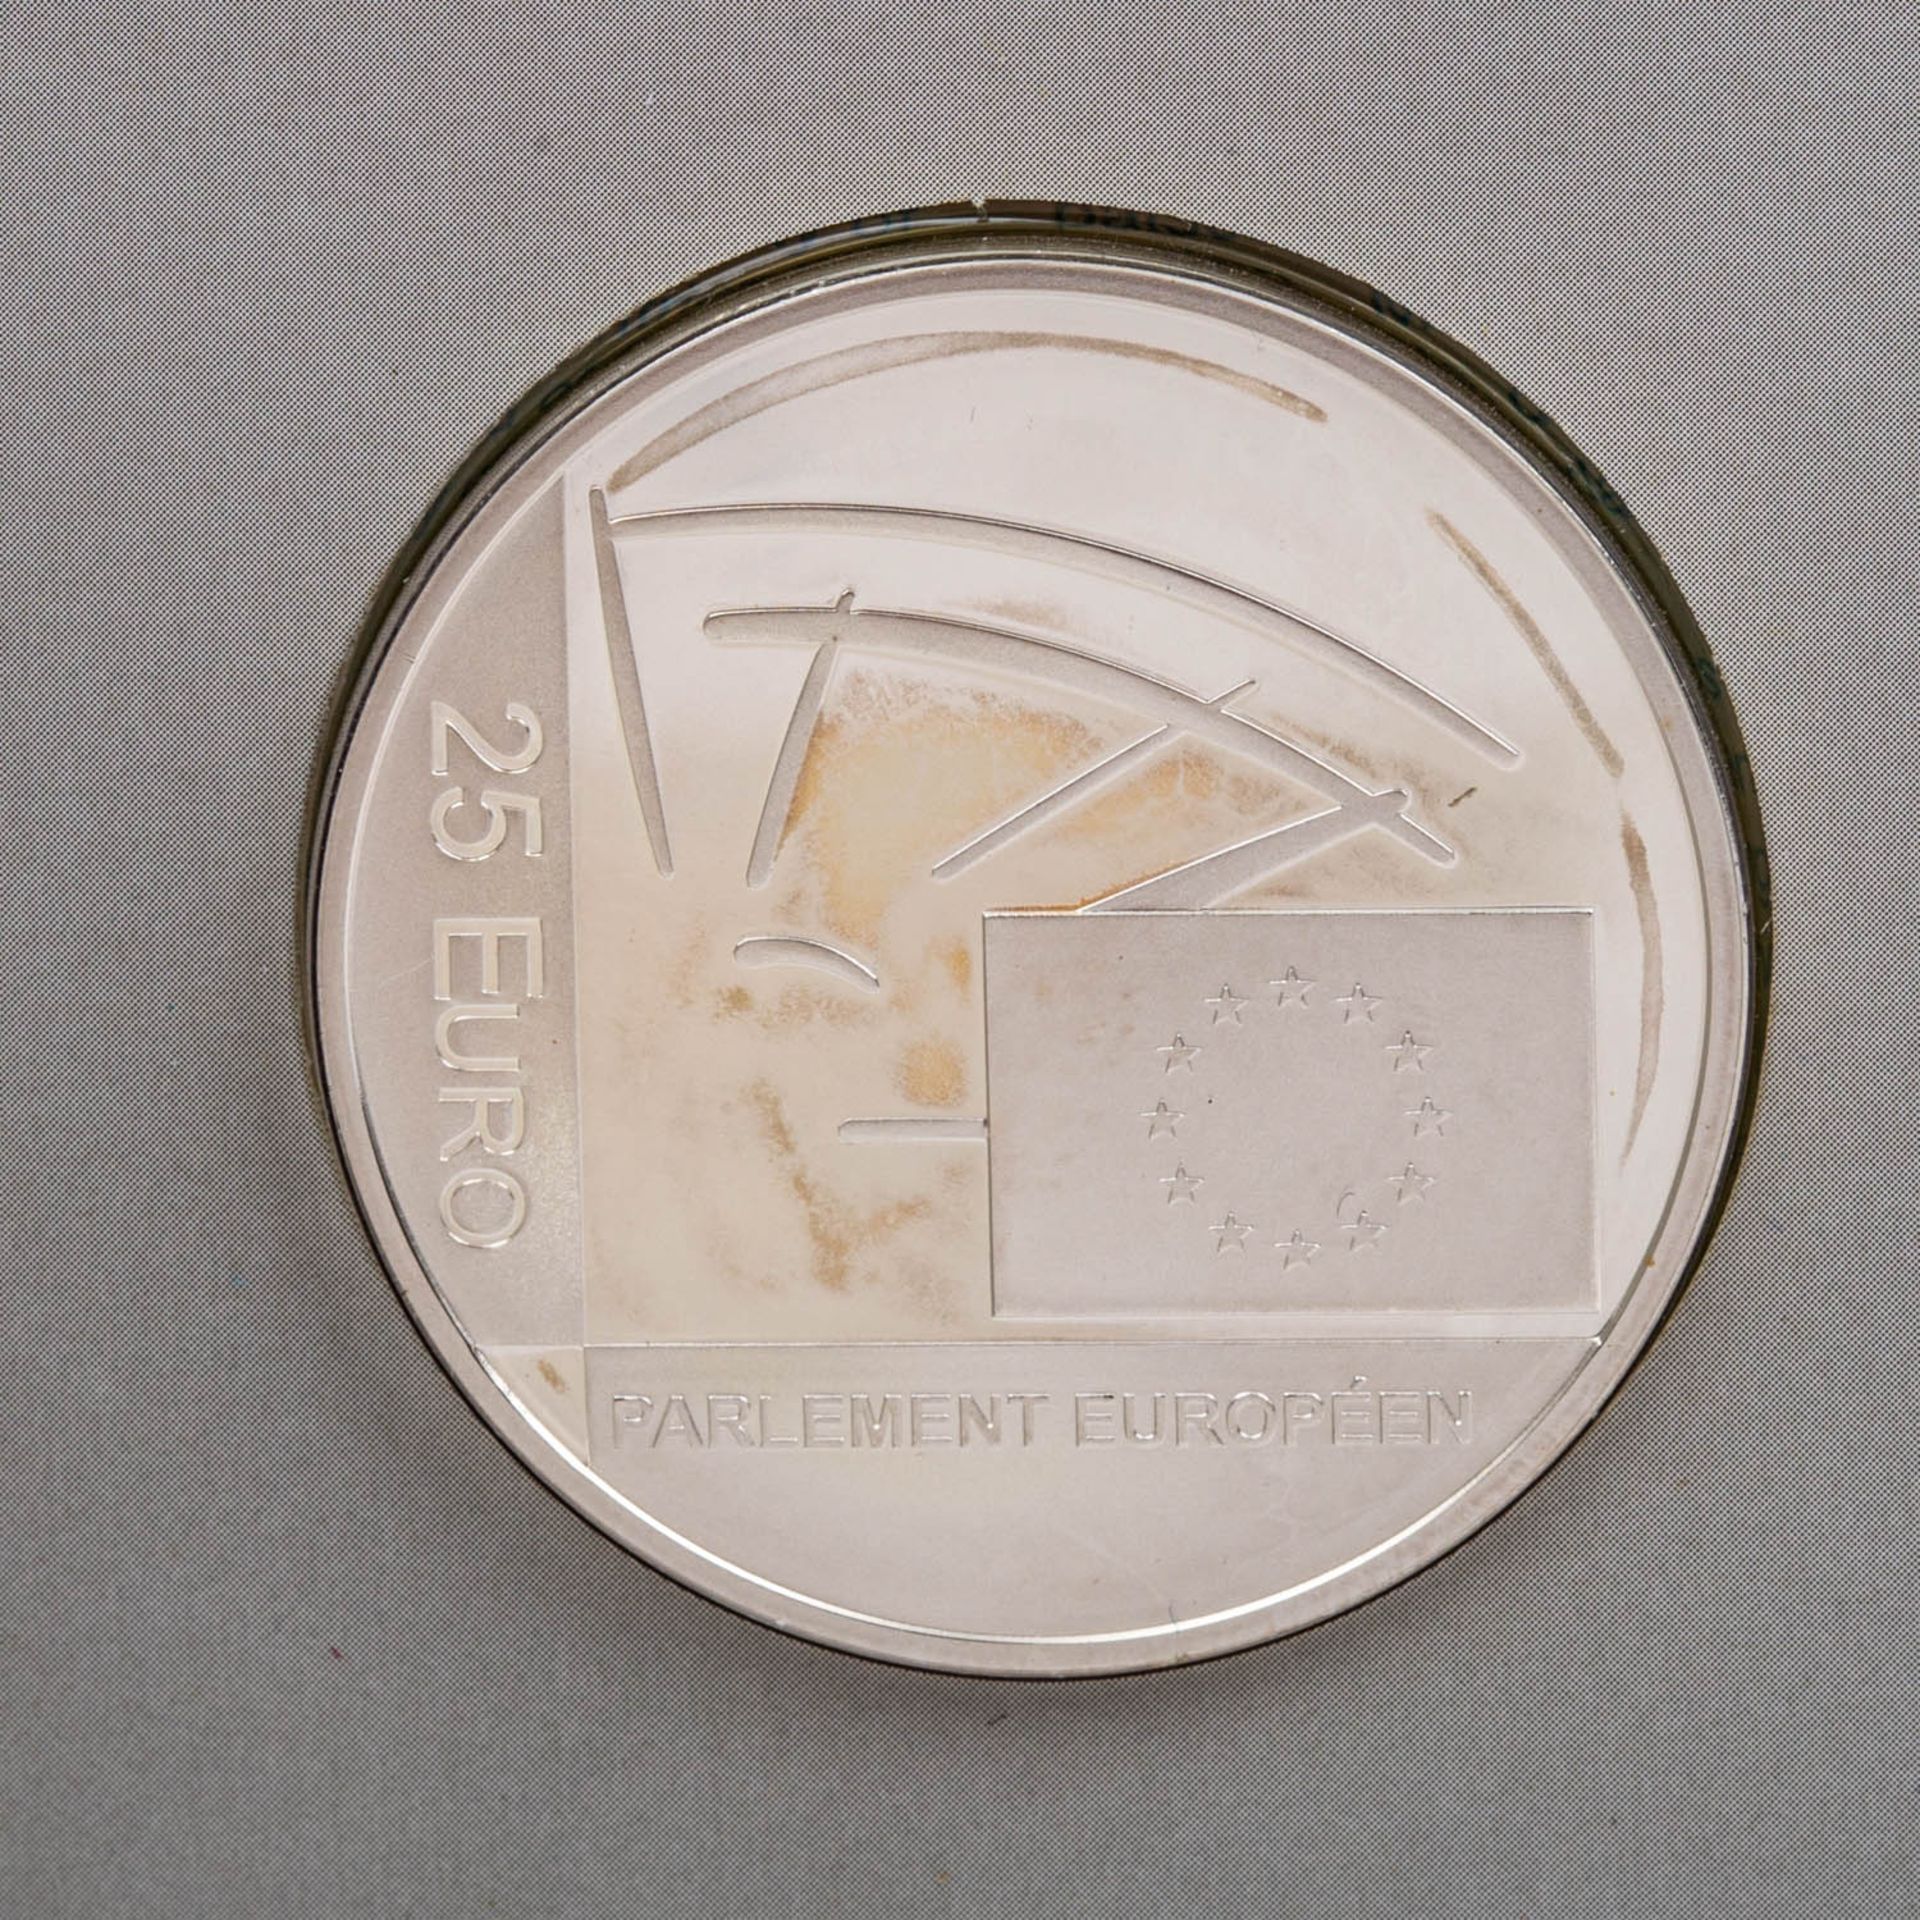 Luxemburg - 25€ 2004, 25 Jahre Europawahlen, - Image 2 of 2